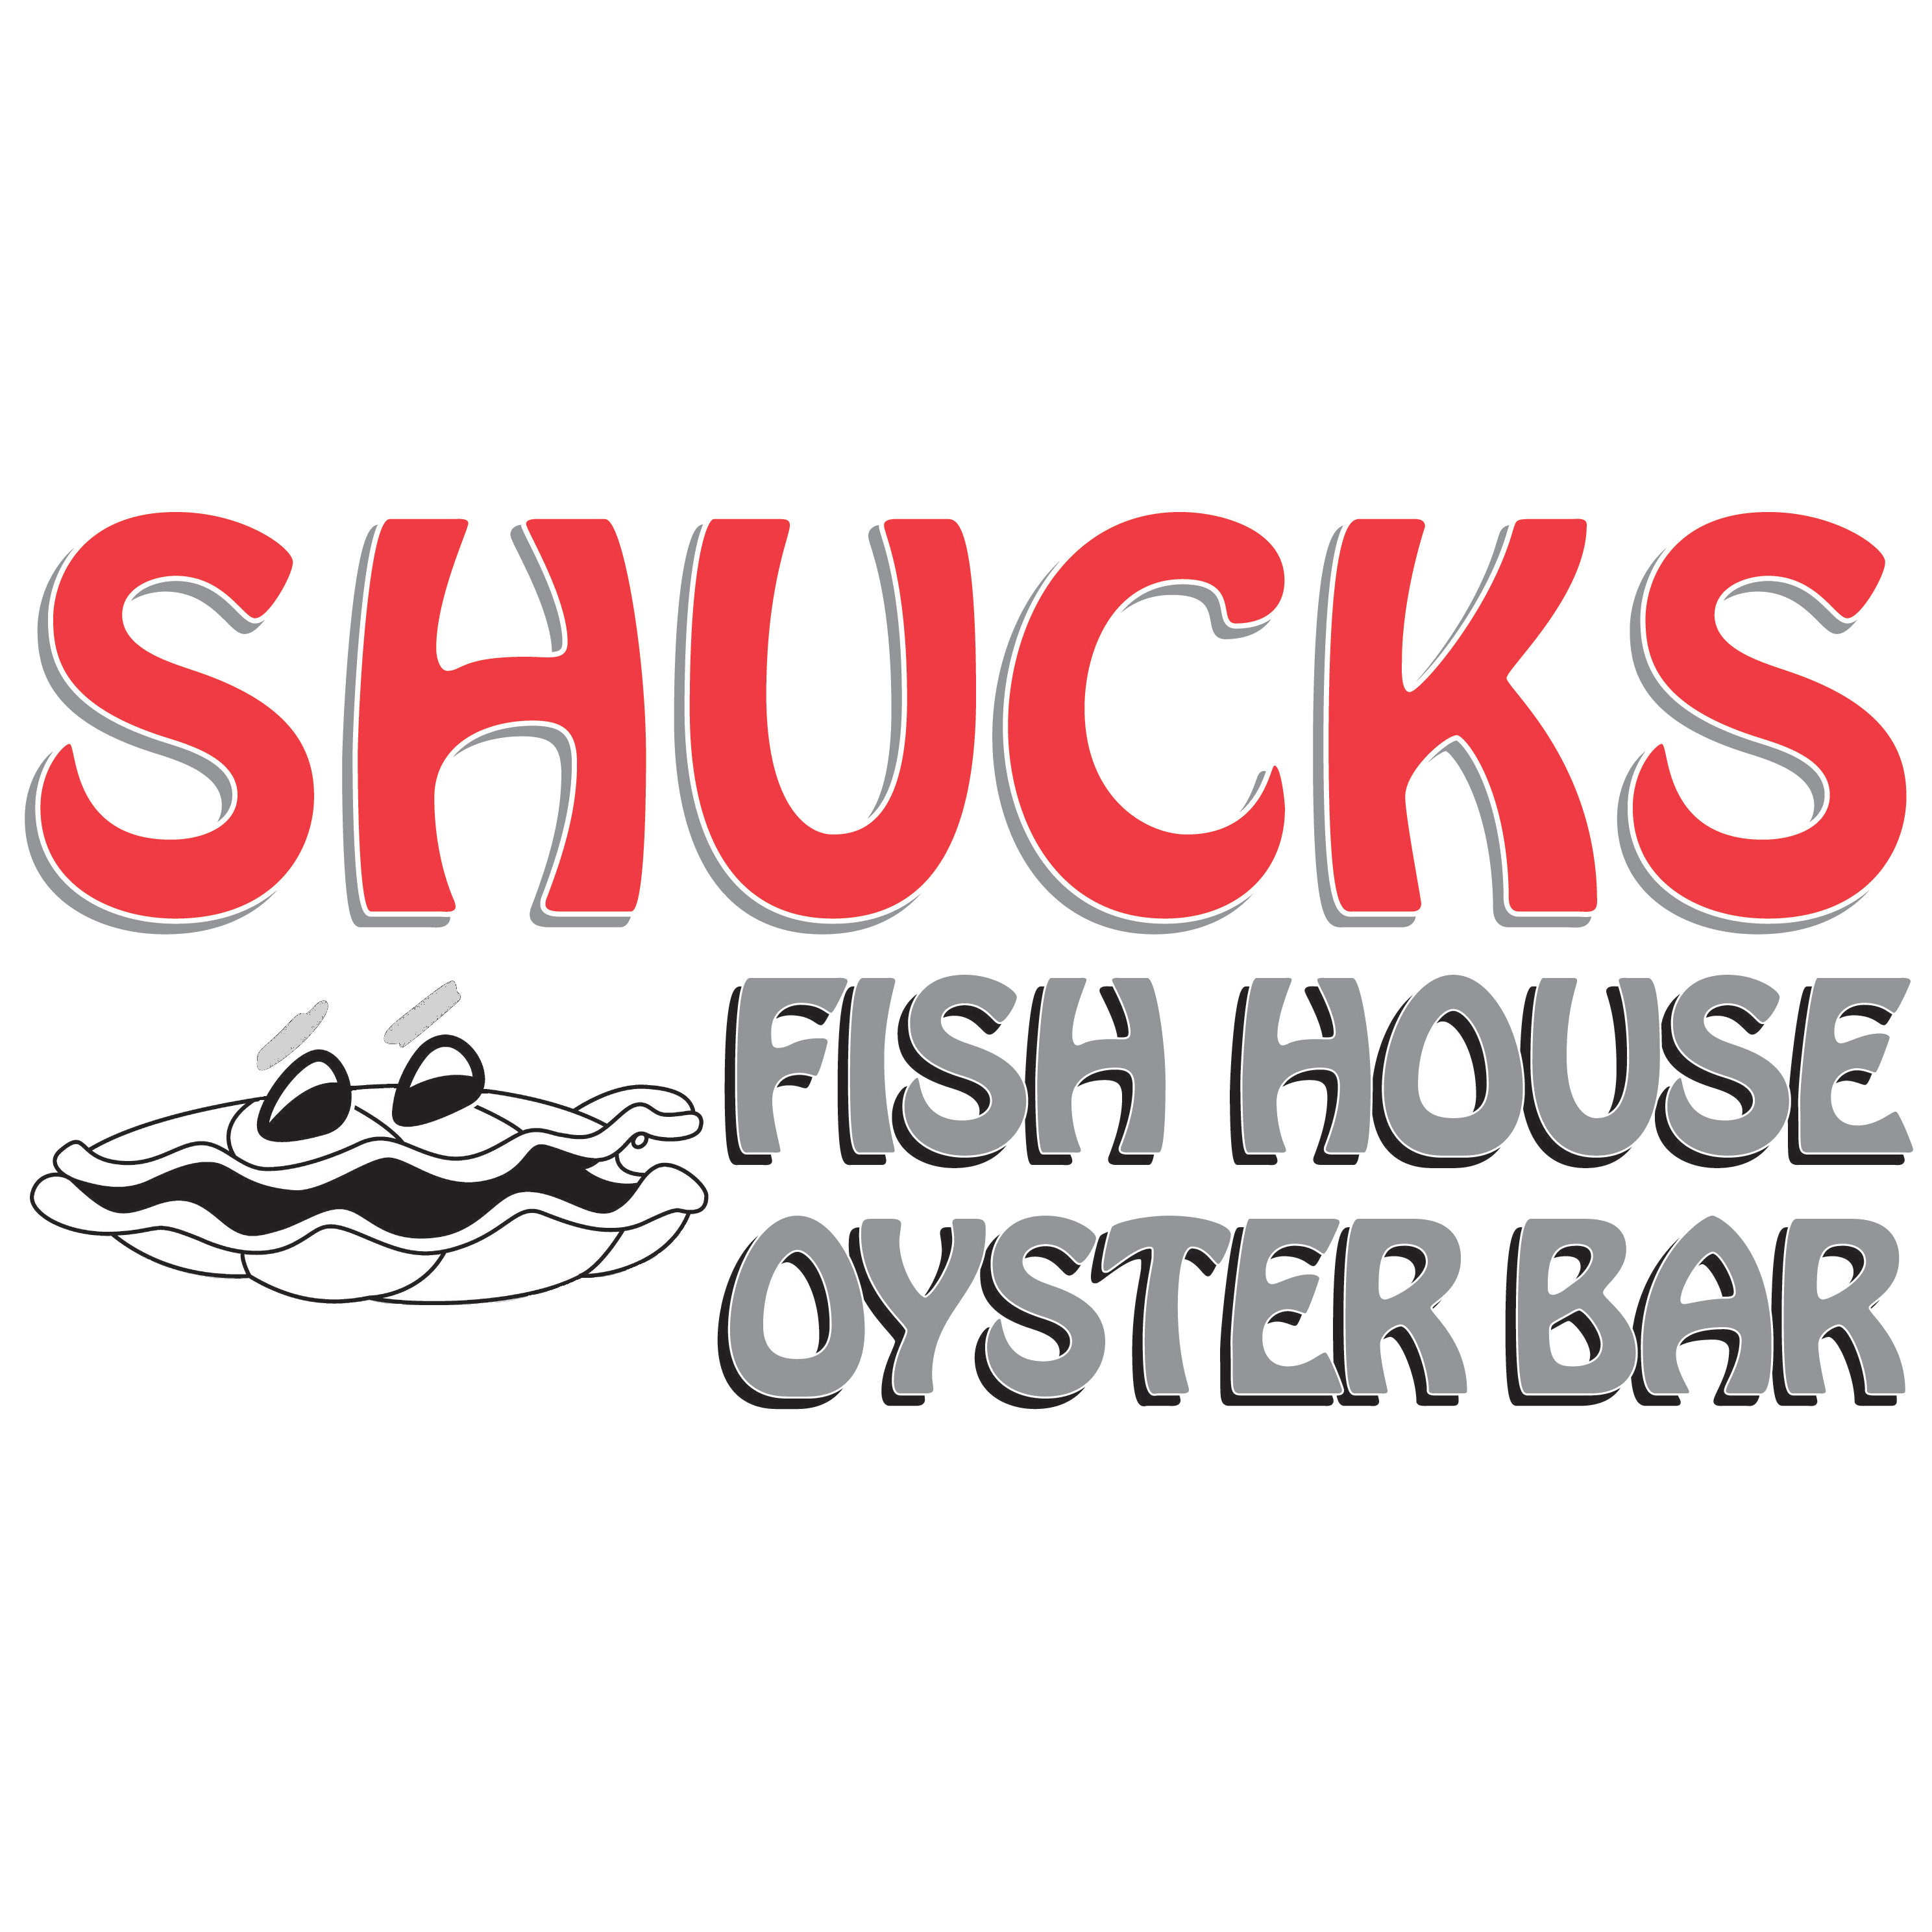 Shucks Fish House & Oyster Bar - Omaha, NE 68130 - (402)763-1860 | ShowMeLocal.com